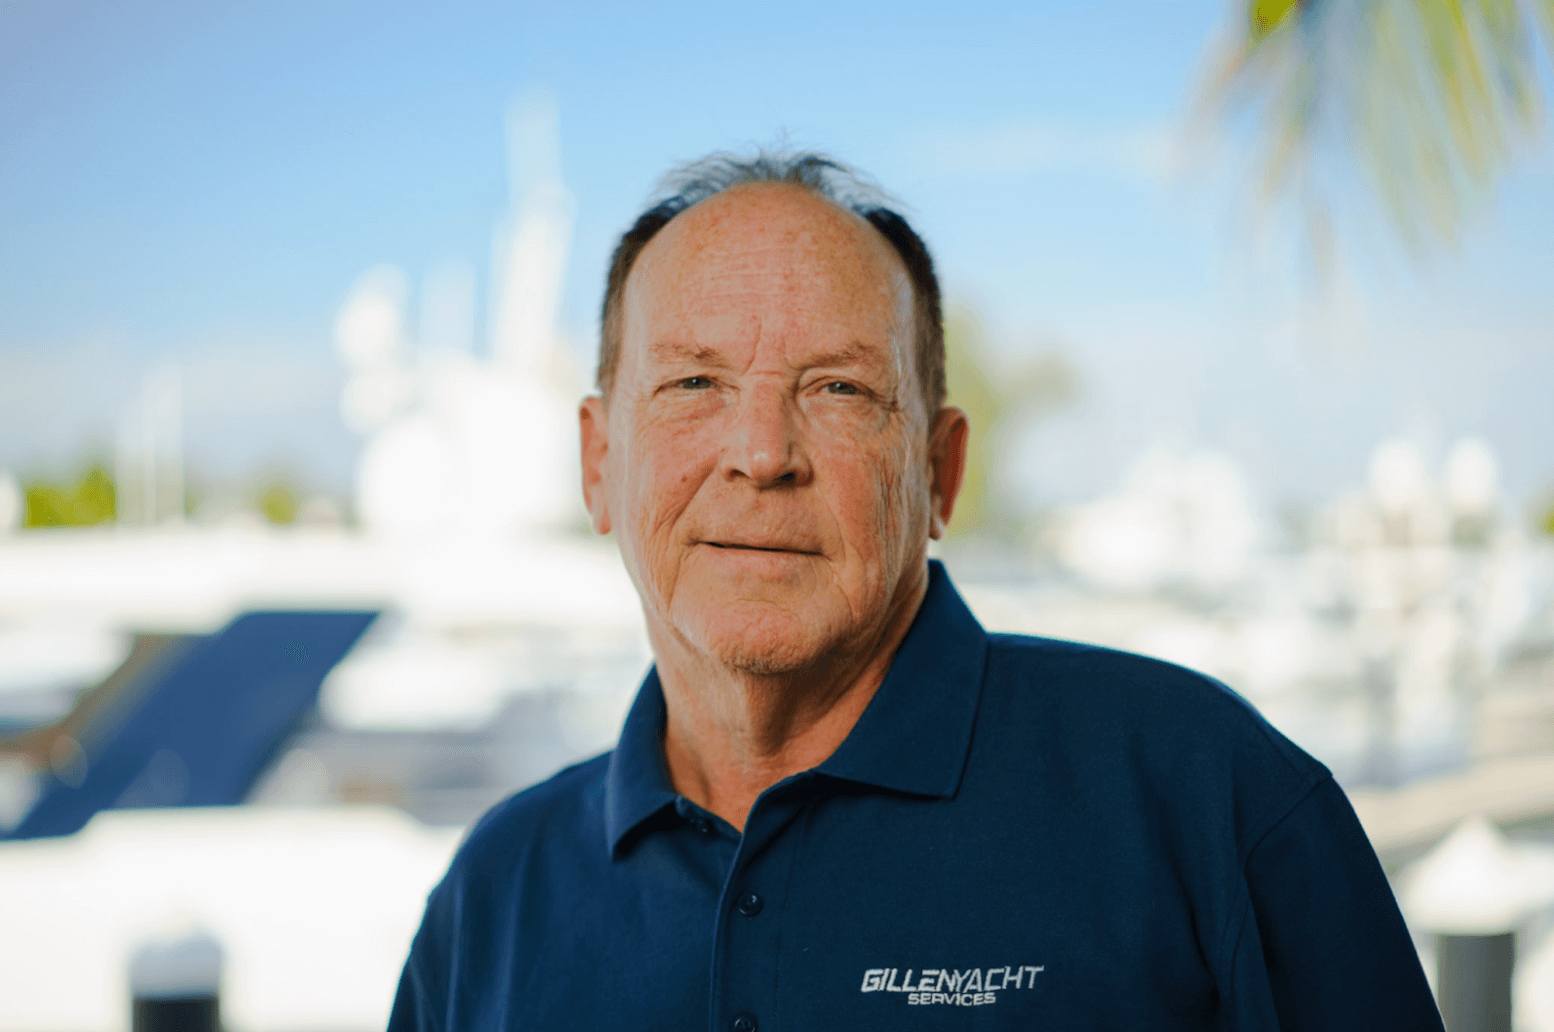 Gillen Yacht Services Expands into Safe Harbor Lauderdale Marine Center Market as Robert McCann Joins the Services Team